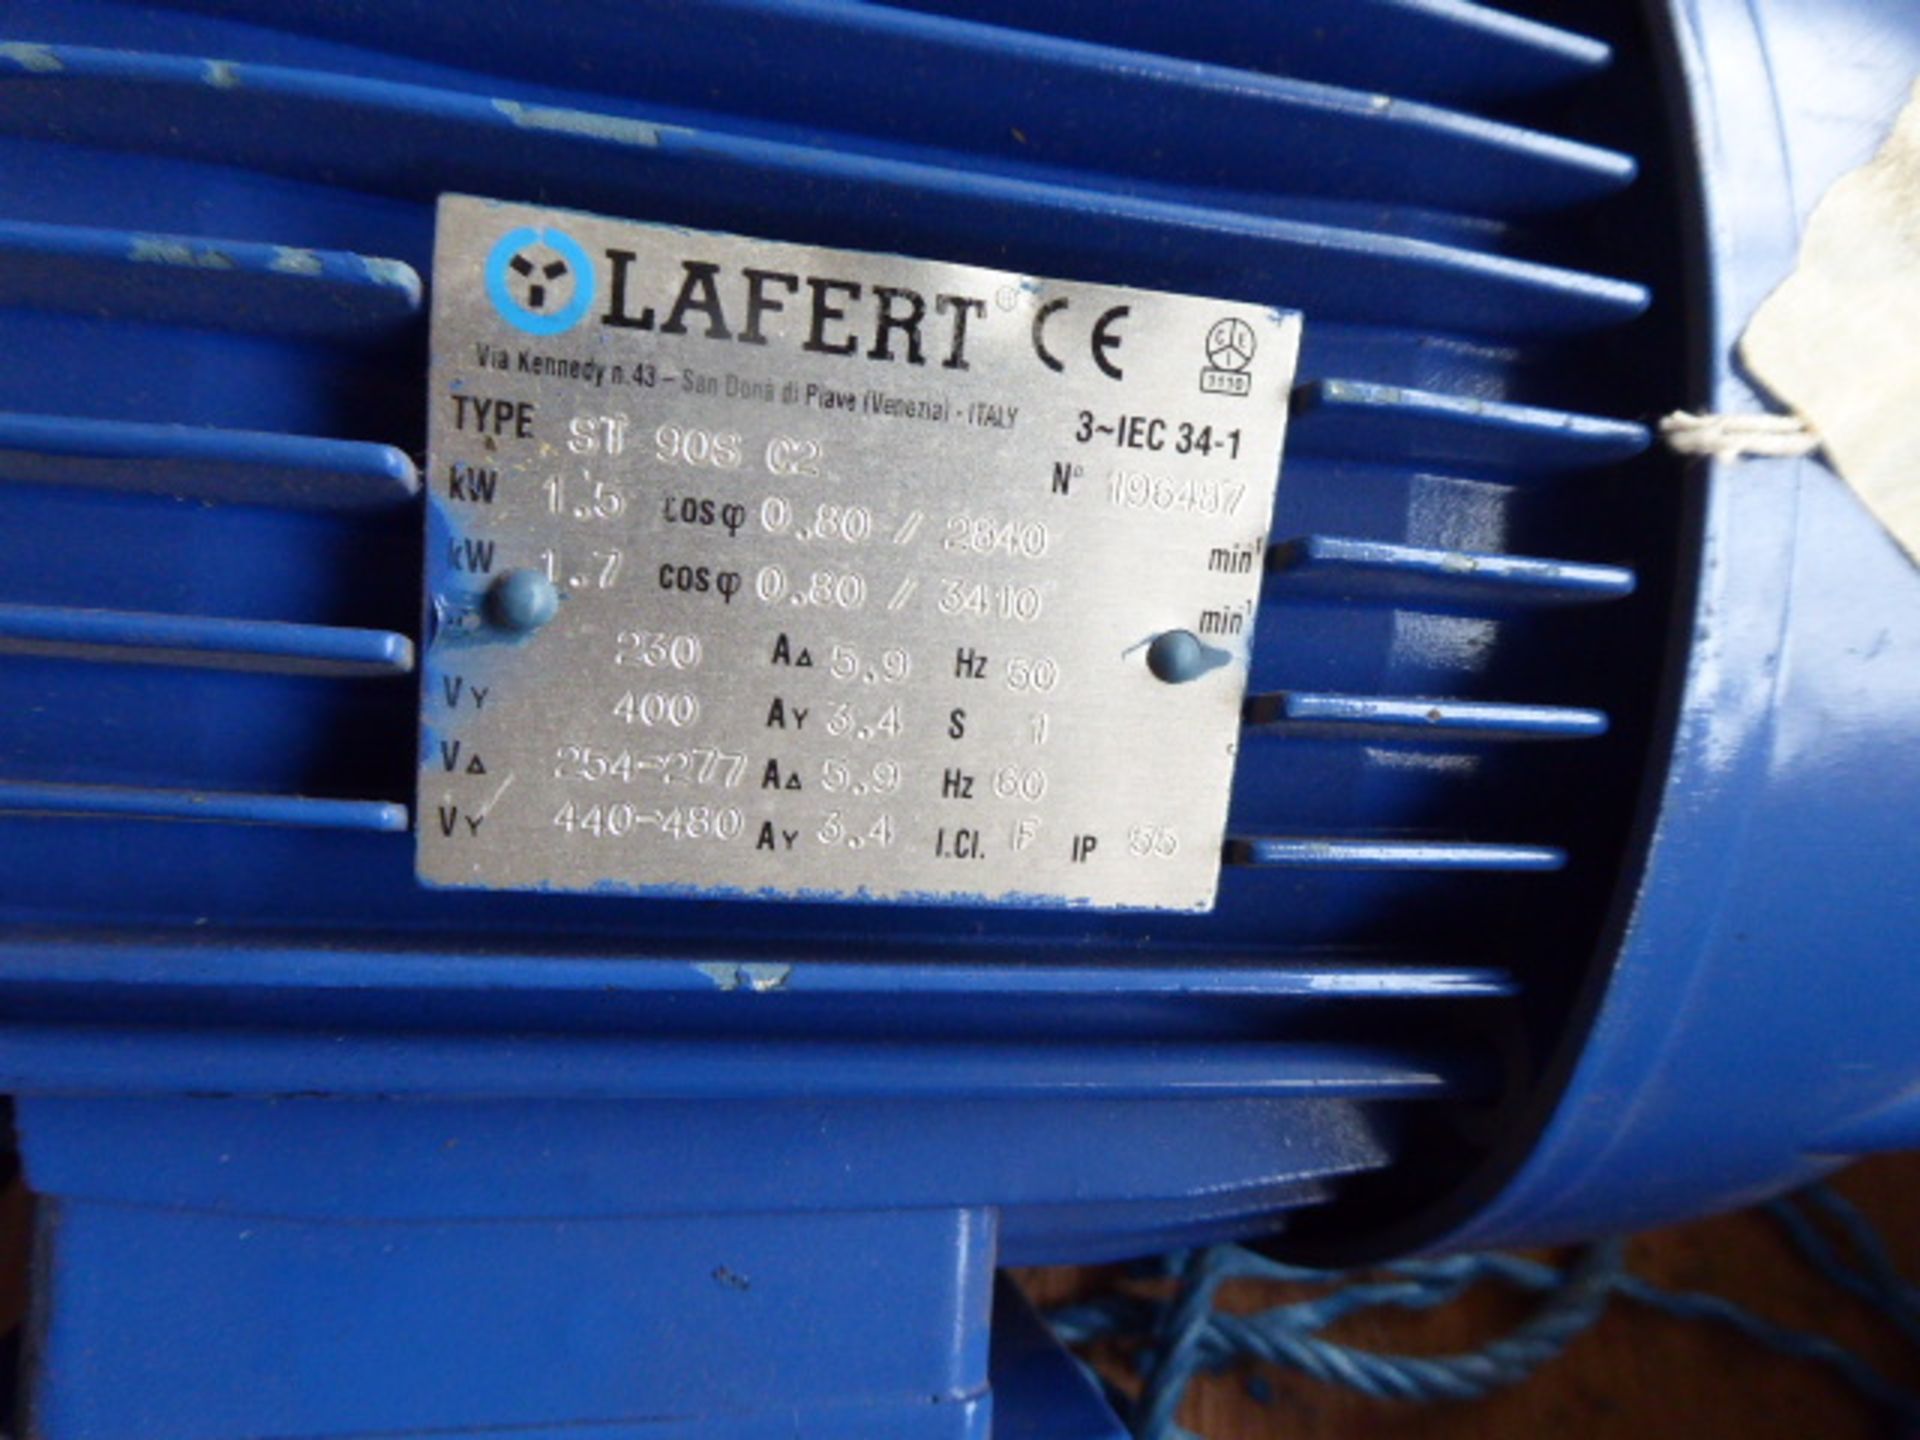 Lafert ST 90S C2 motor, 1.7kw - Image 2 of 3